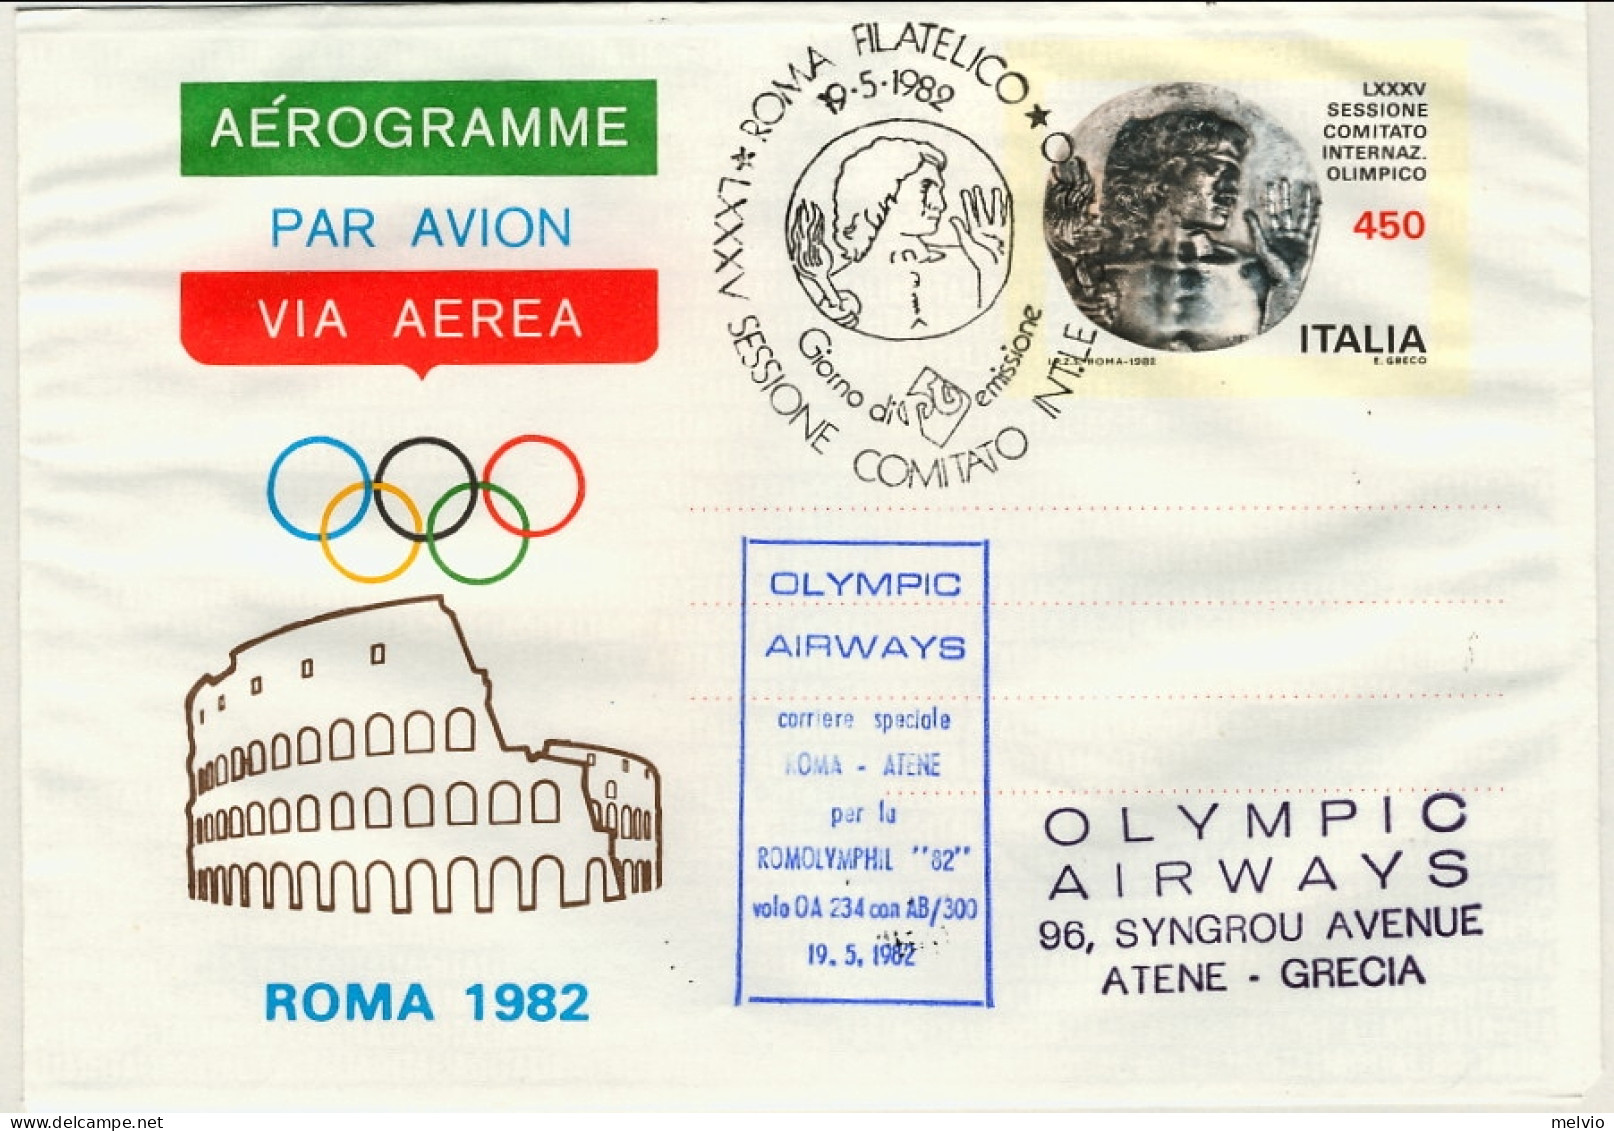 1982-L.450 LXXXV Sessione Comitato Internaz.olimpico Bollo Olympic Airways Roma  - 1981-90: Marcofilie